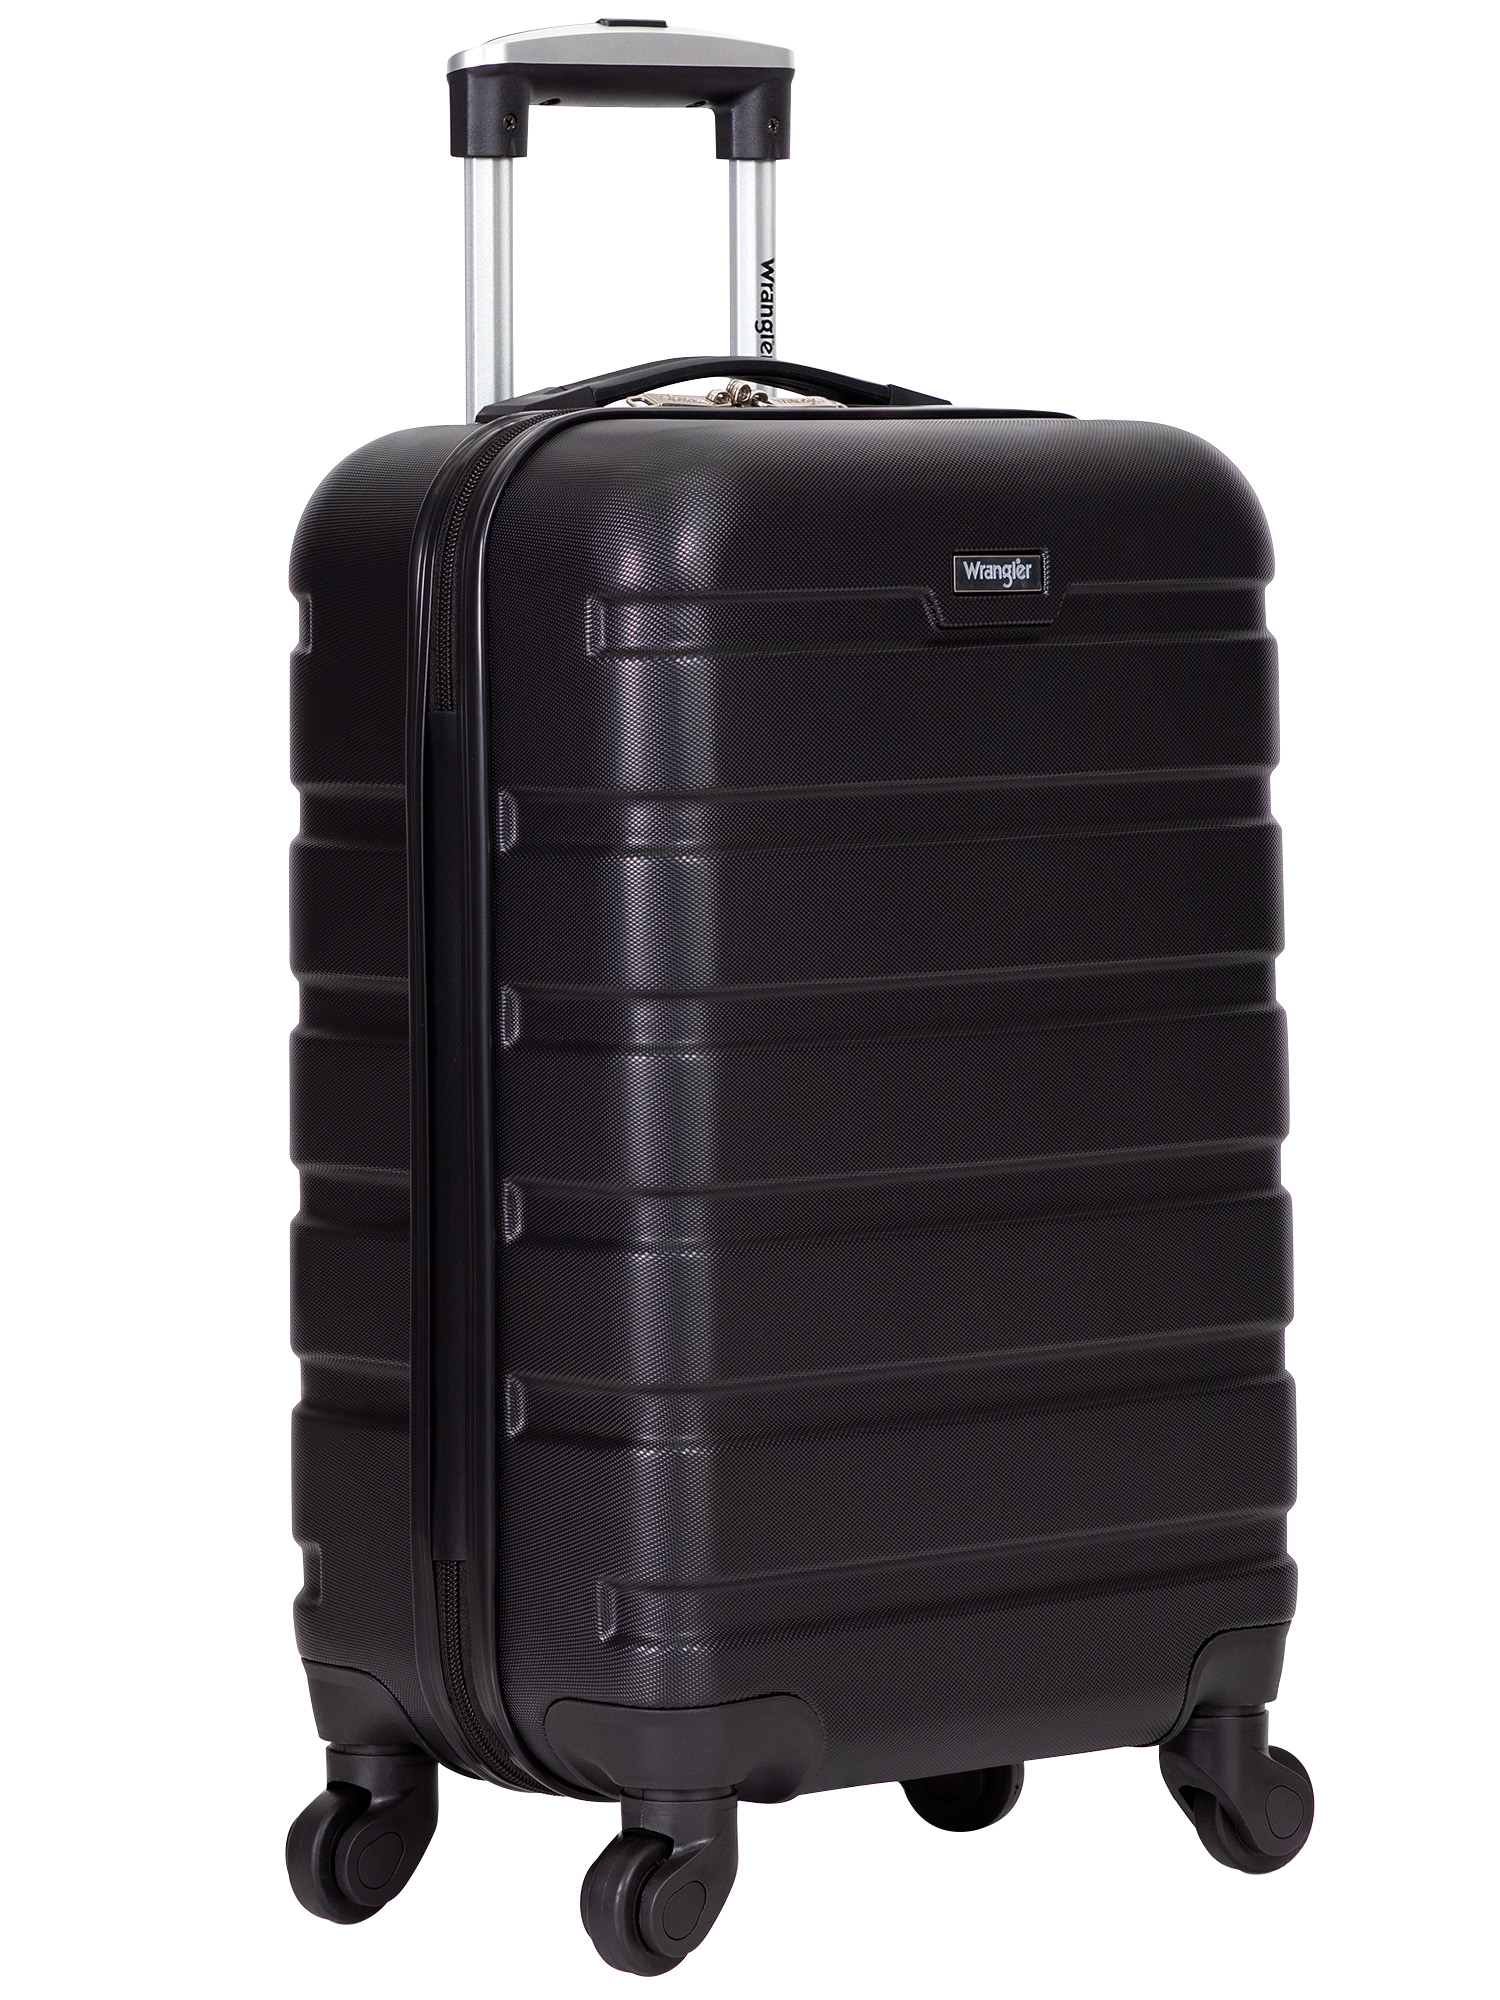 Wrangler 20” Carry-on Rolling Hardside Spinner Luggage Black - image 2 of 8